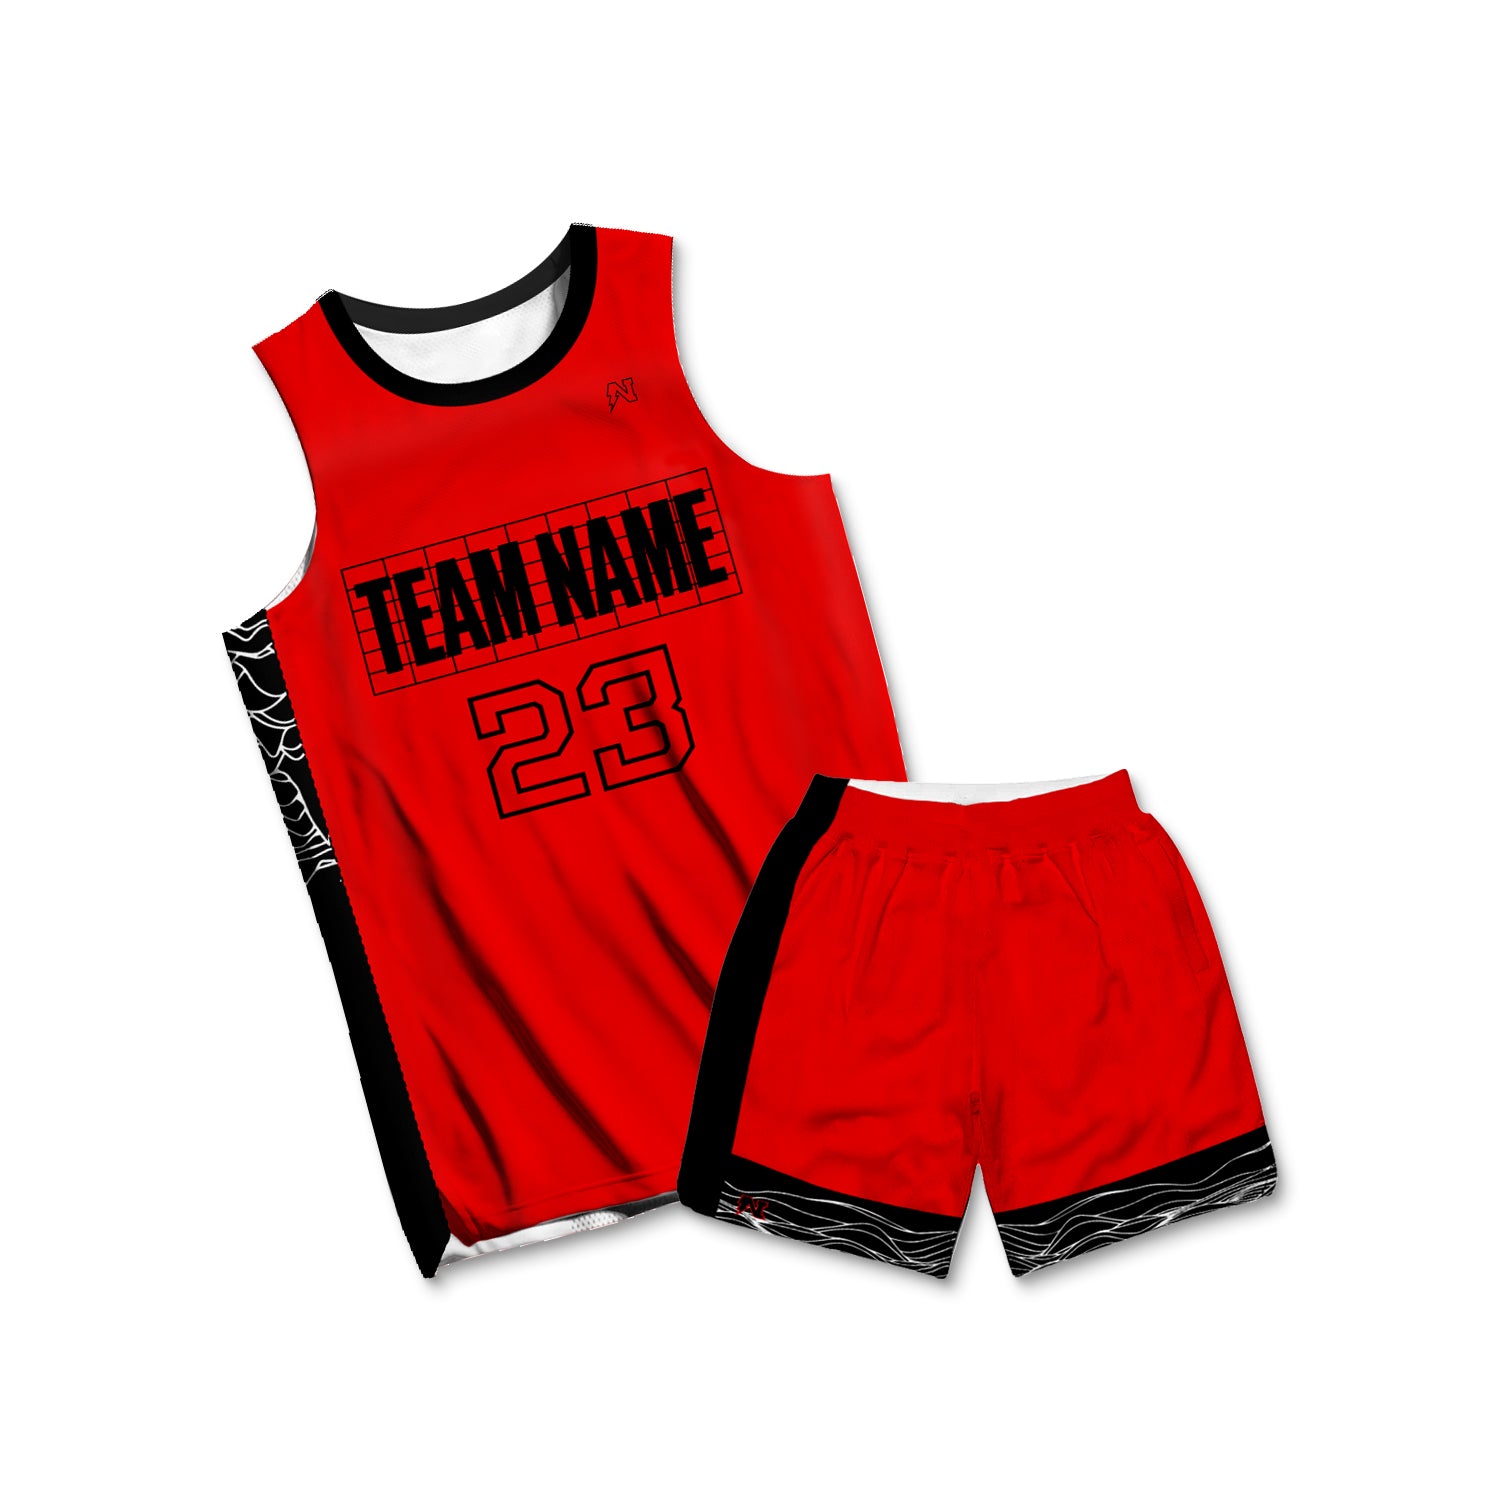 Fully Customizable Reversible Basketball Jerseys - Custom Apparel